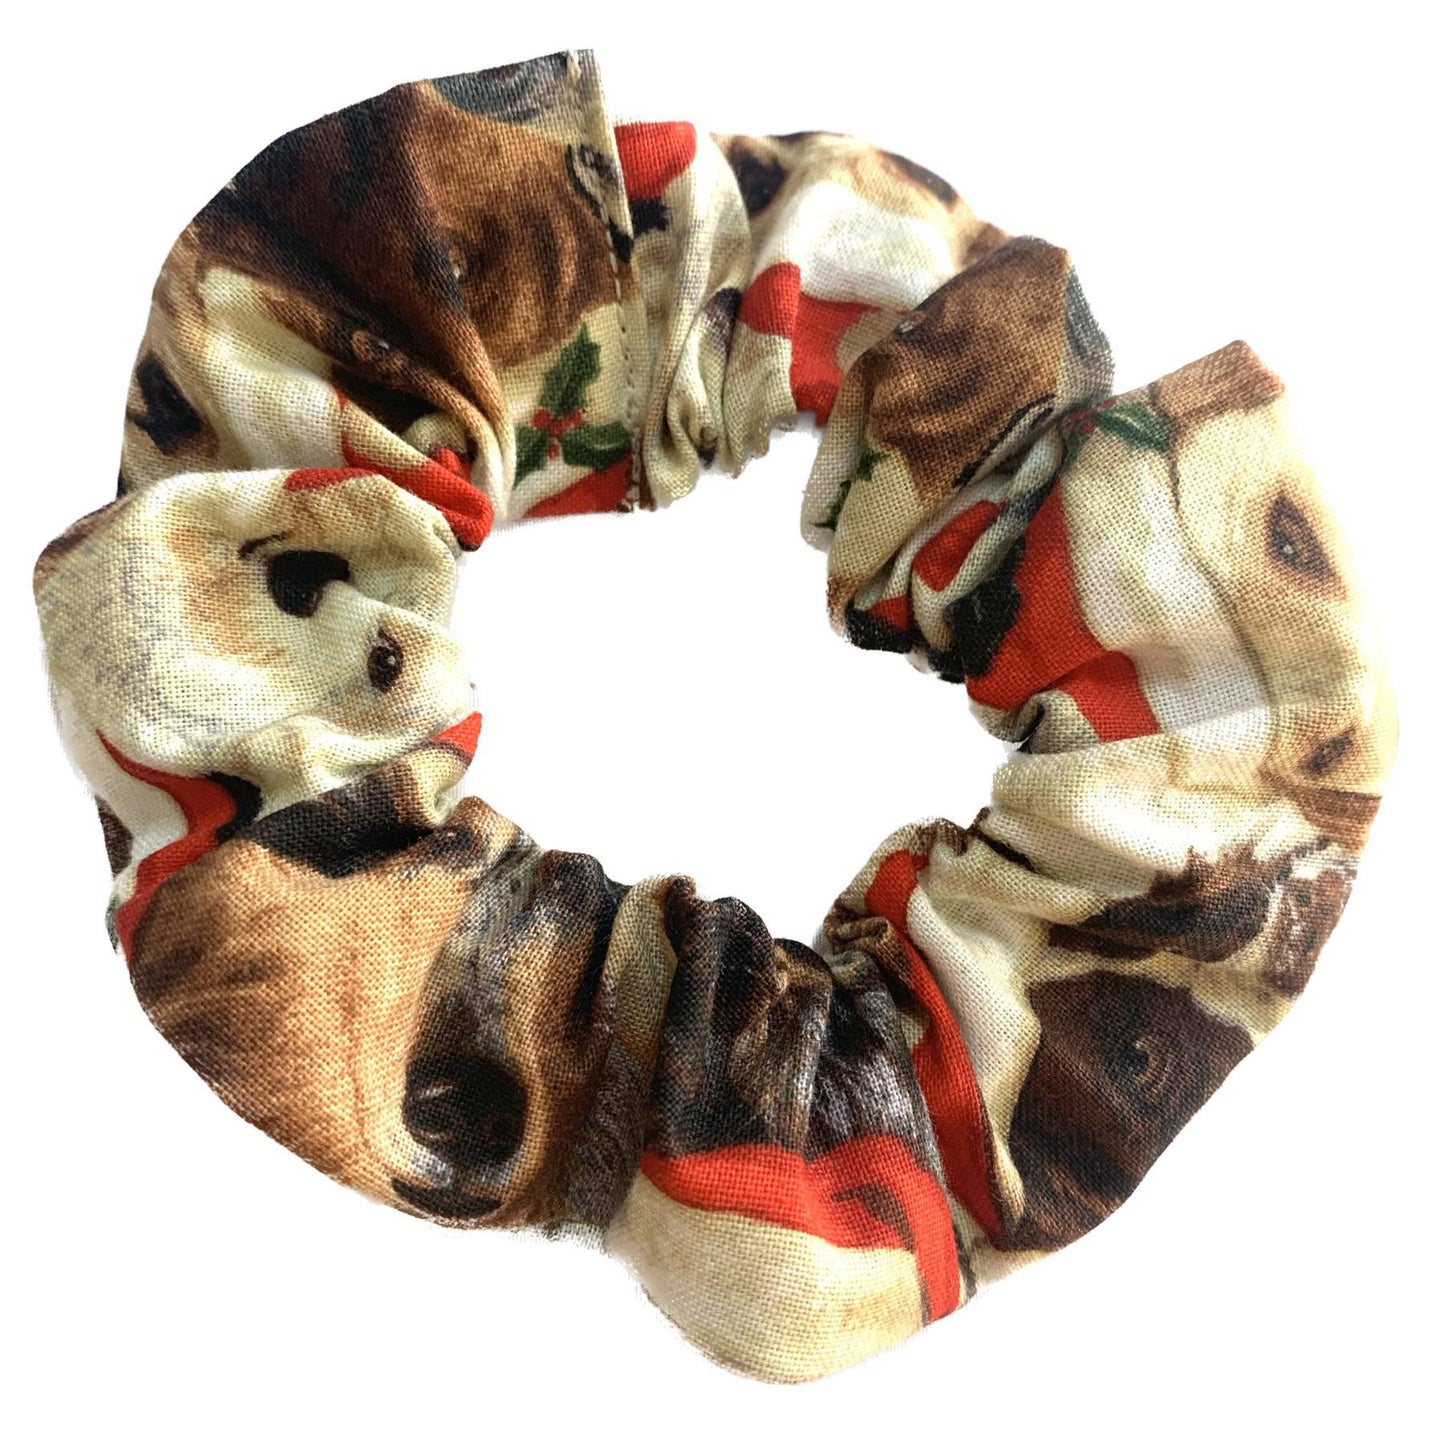 MAKIN' WHOOPEE - "Festive Doggos" Christmas Scrunchies